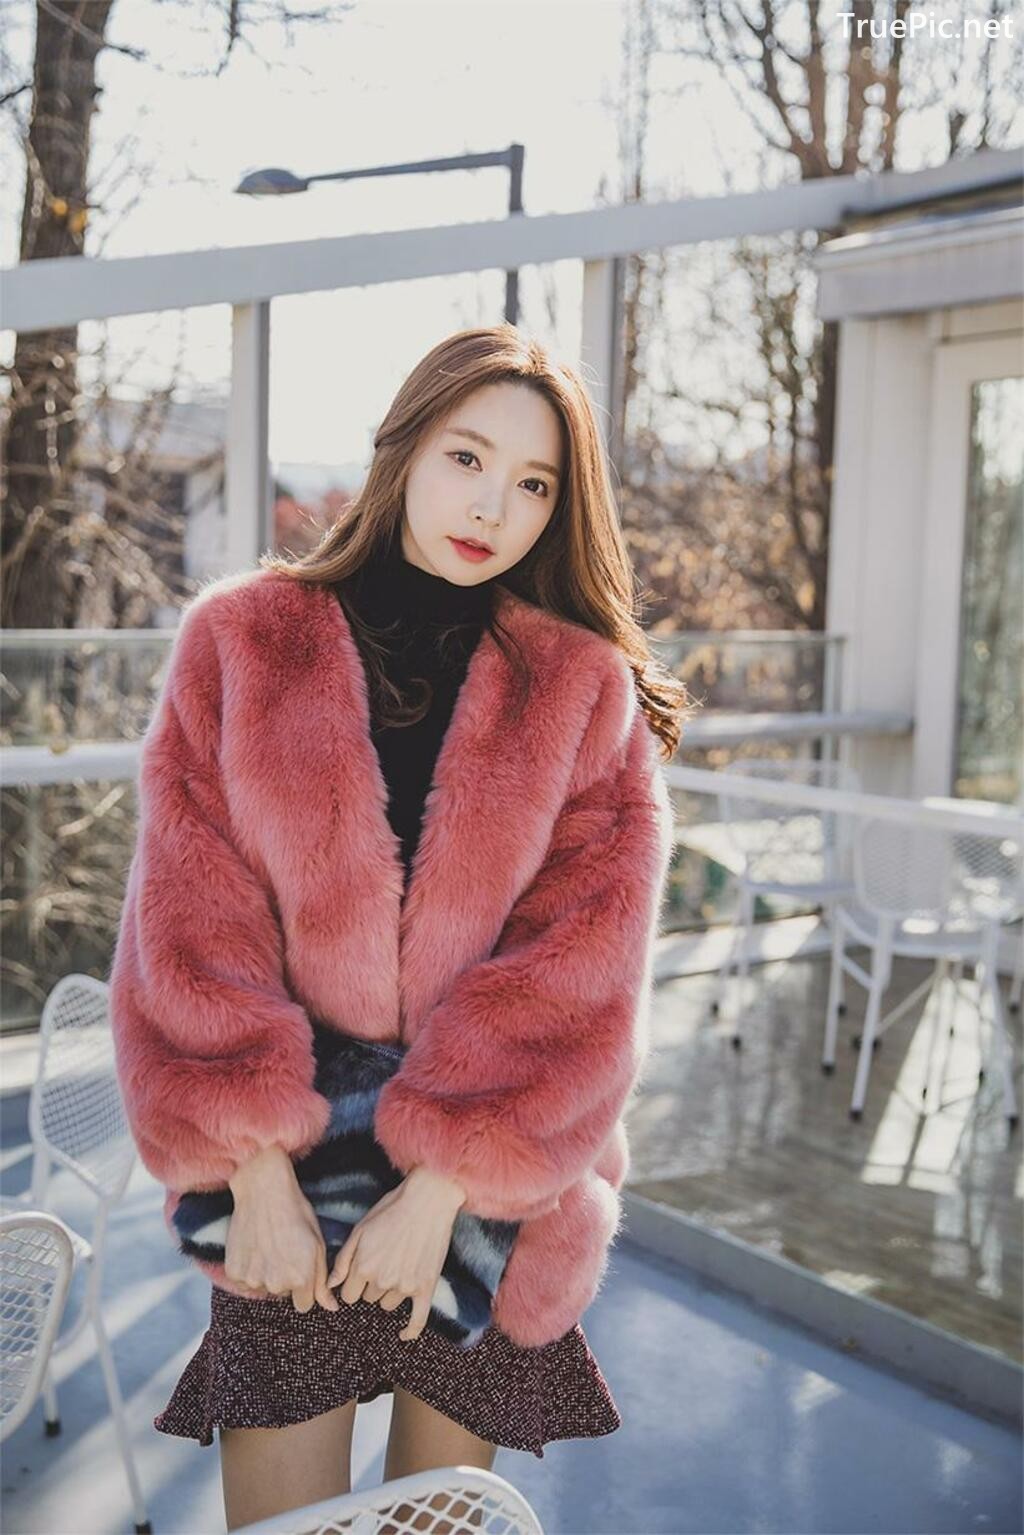 Image-Korean-Fashion-Model-Park-Soo-Yeon-Beautiful-Winter-Dress-Collection-TruePic.net- Picture-44